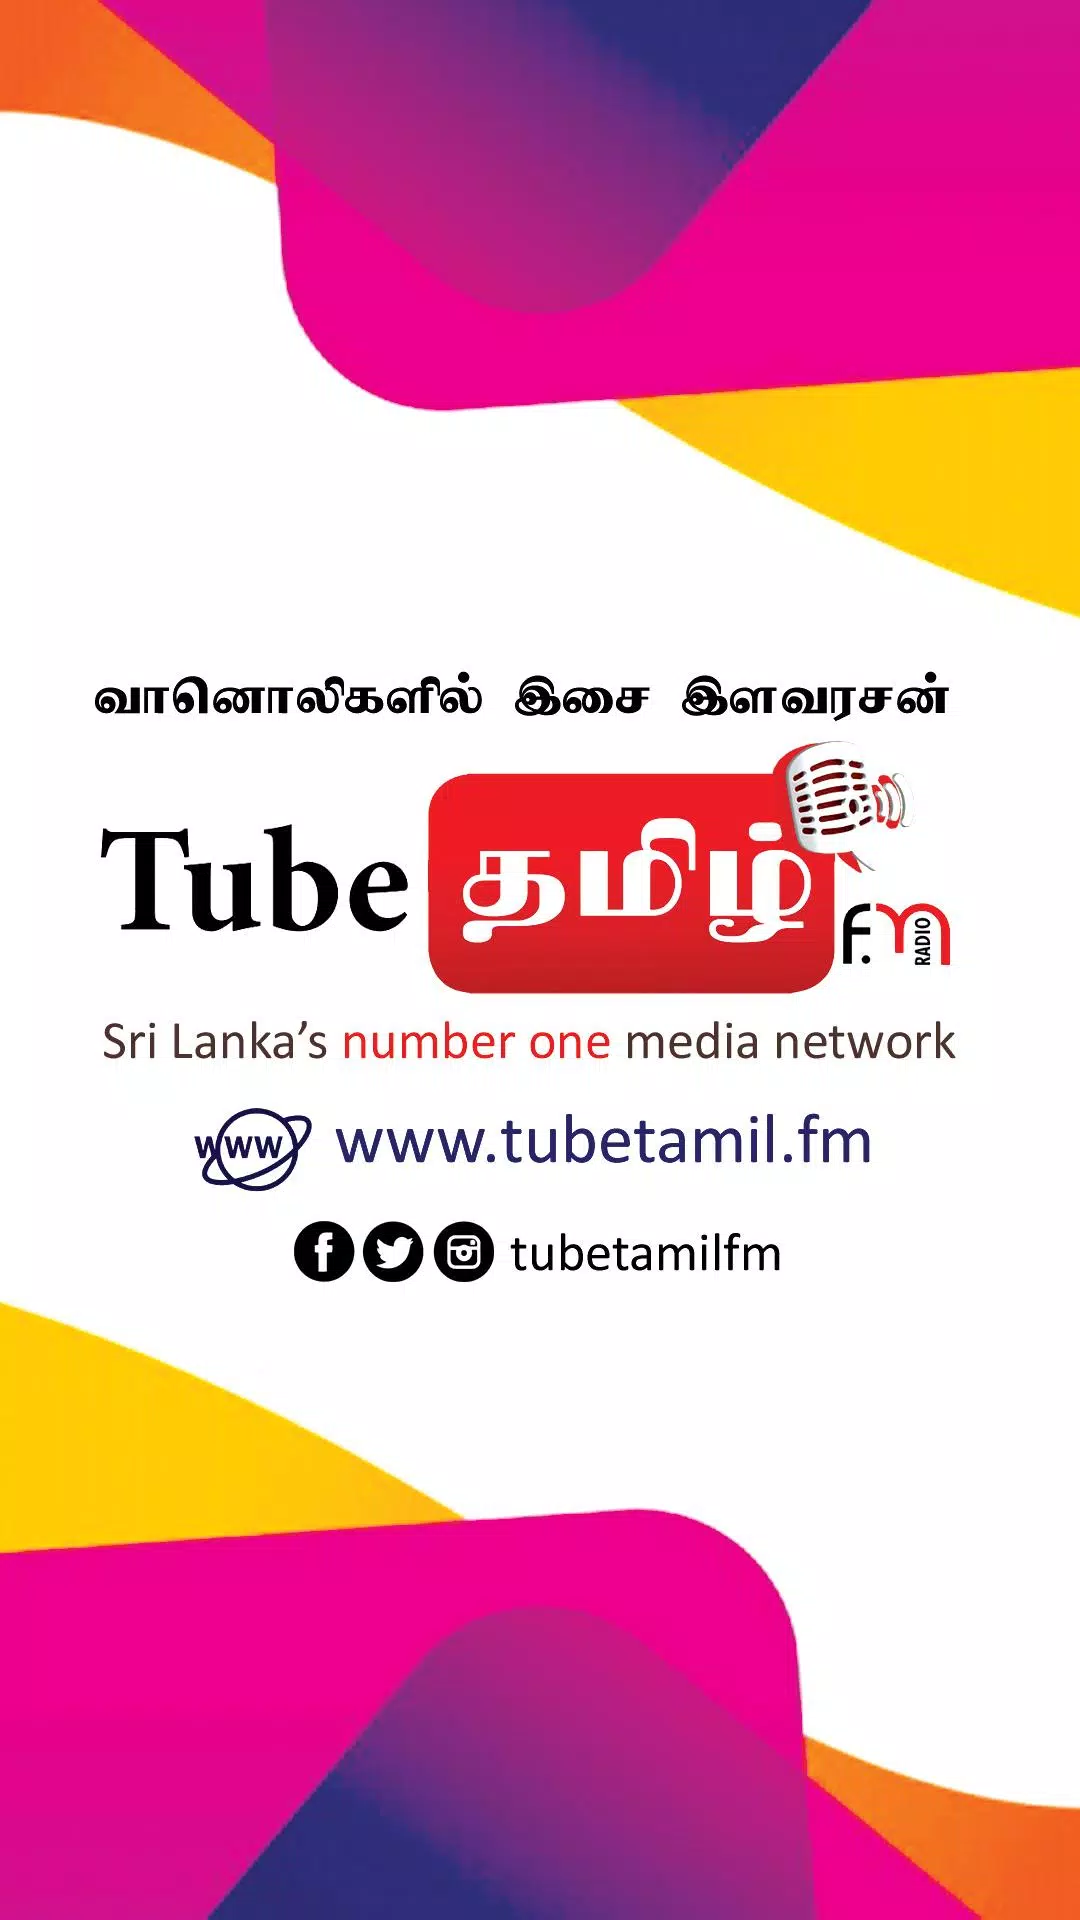 TubeTamil FM APK for Android Download